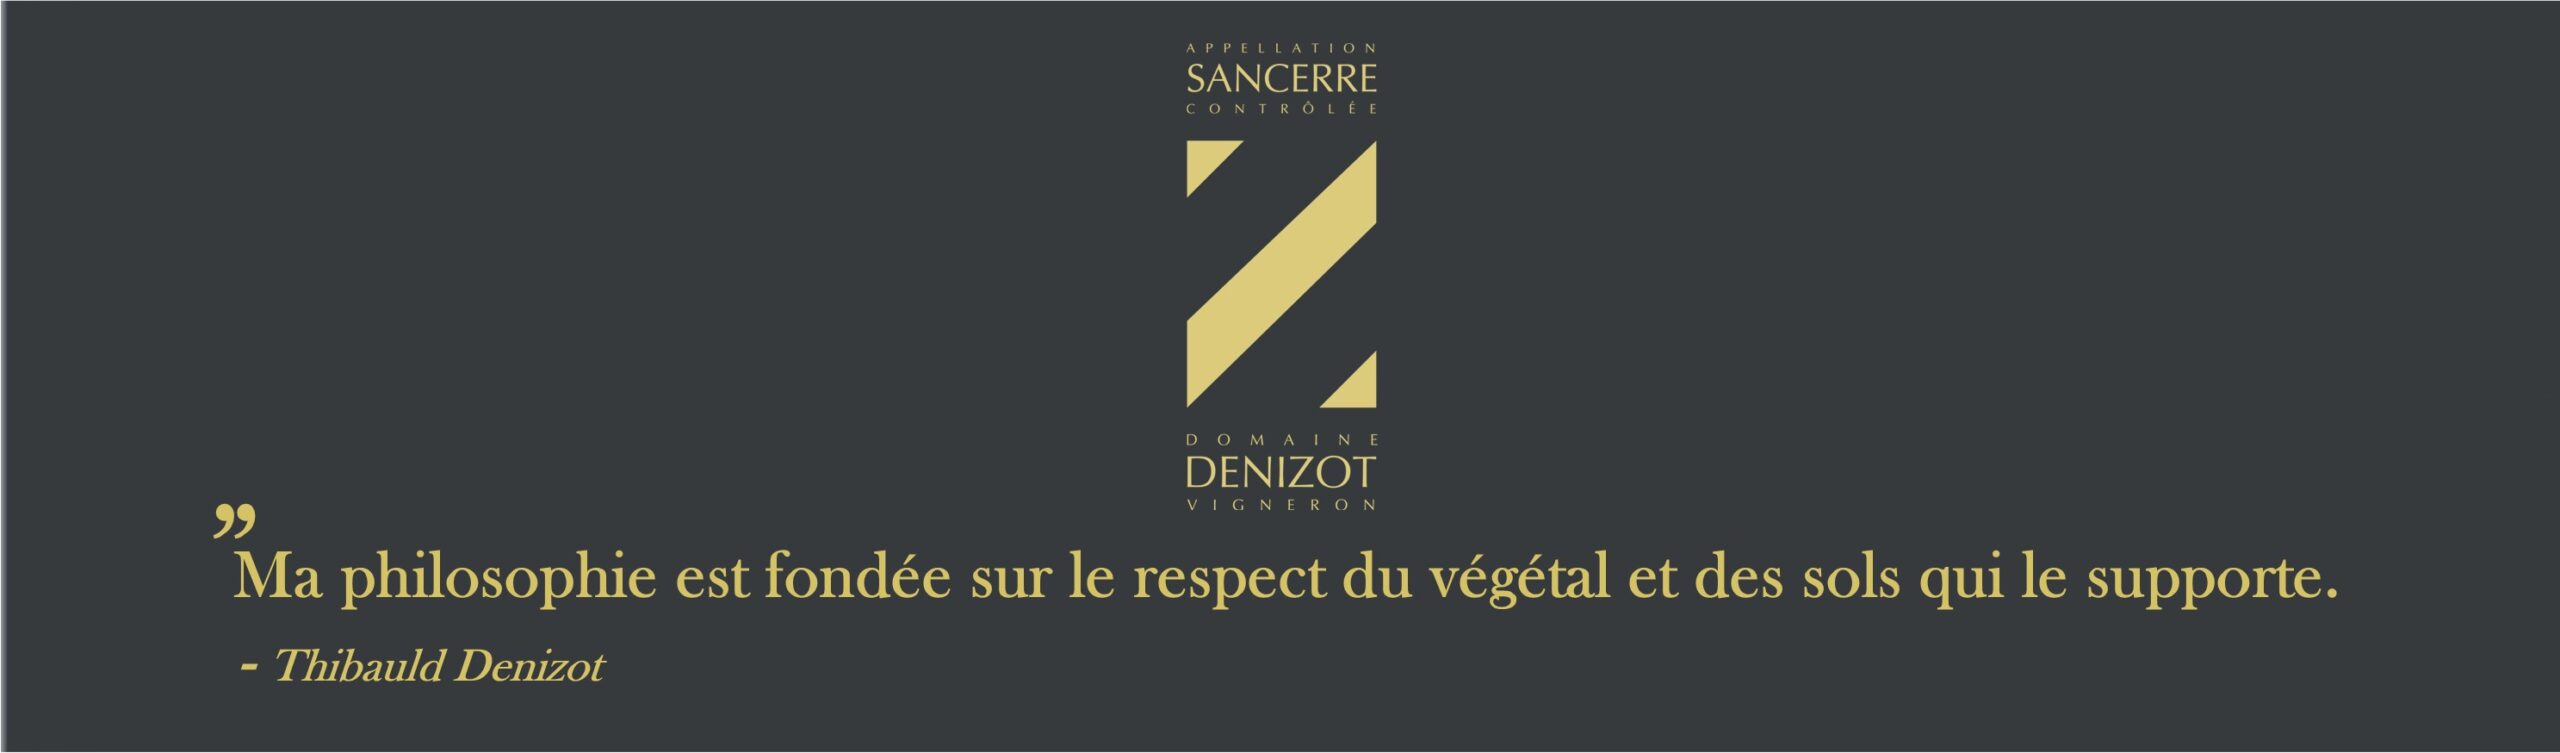 Sancerre Domaine Denizot citat fra vinmageren, 